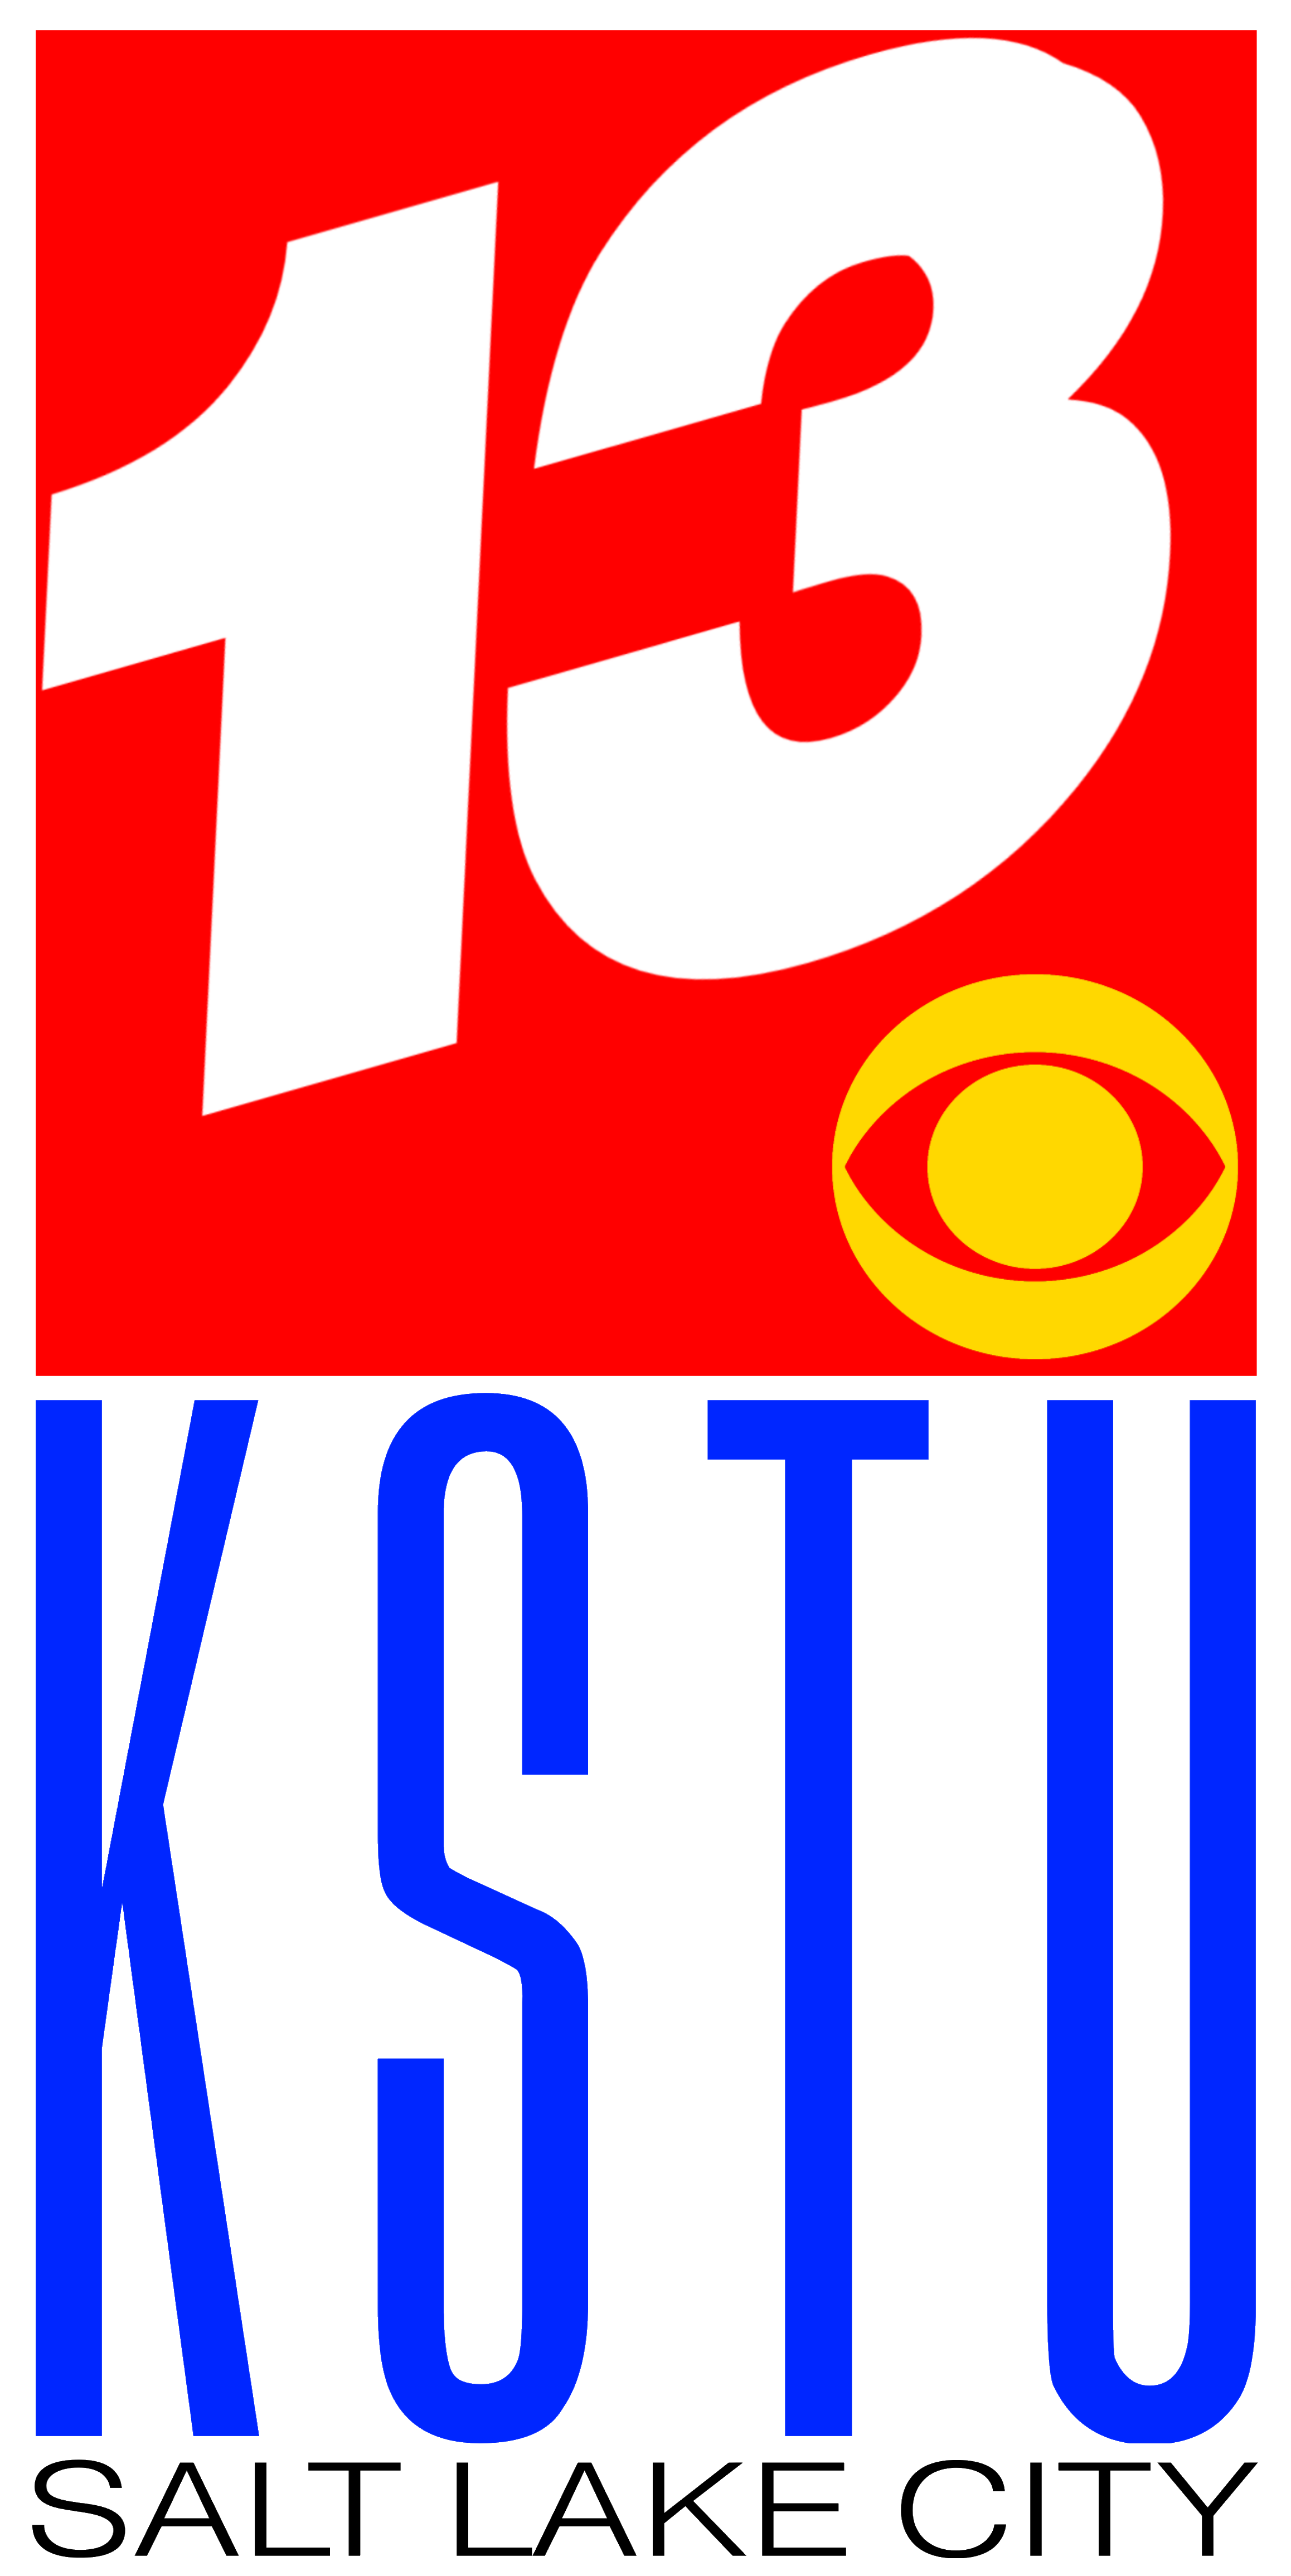 AlternateHistory.com's KSTU logo #1.png